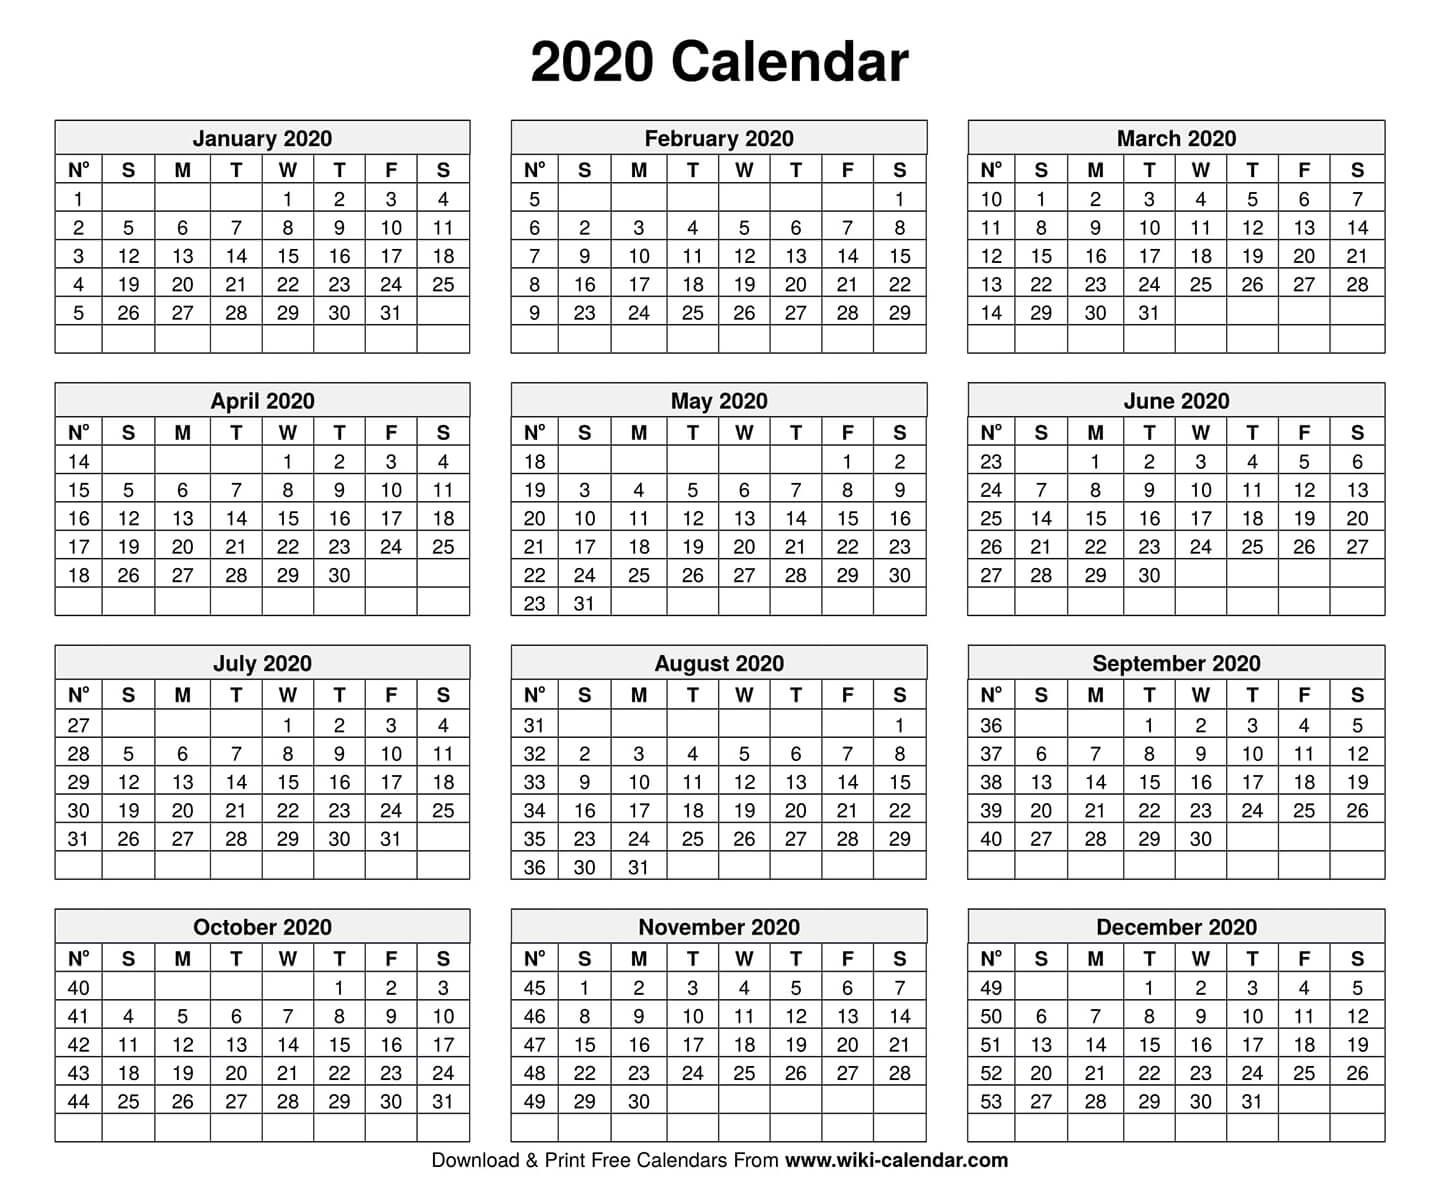 wwdc 2020 calendar